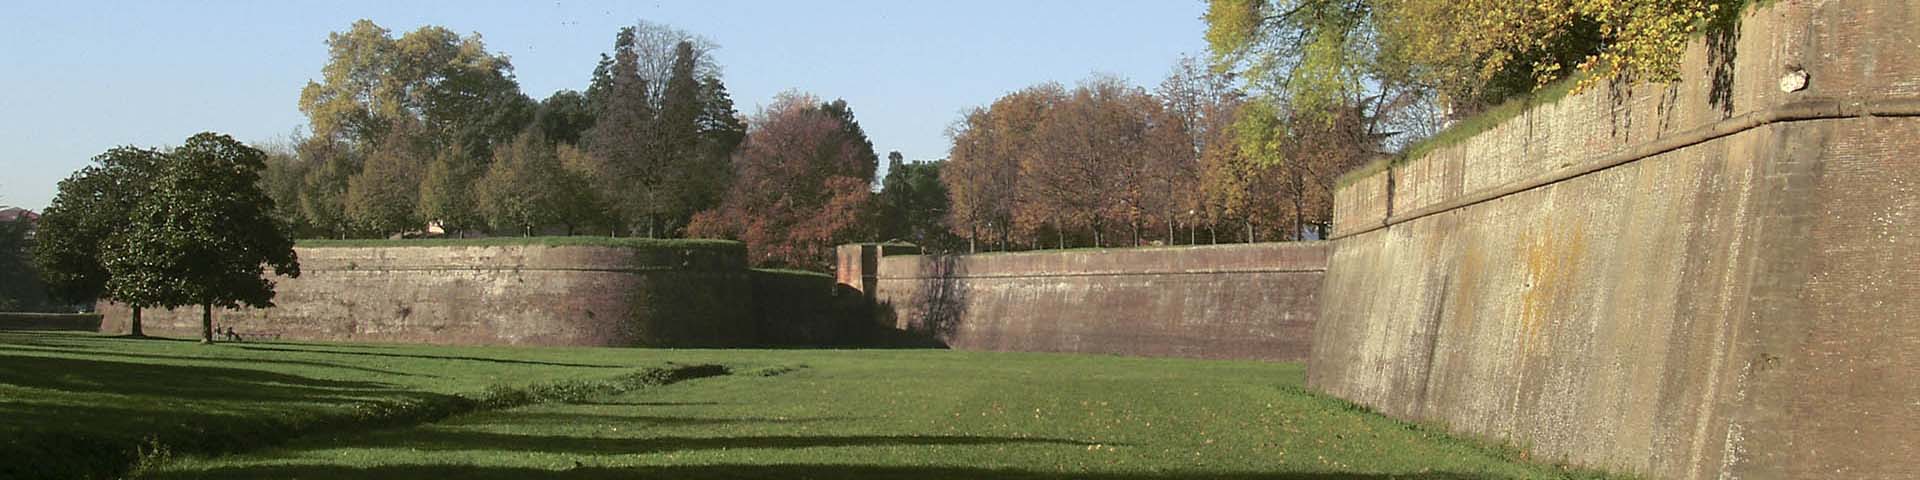 Lucchesia - Mura di Lucca